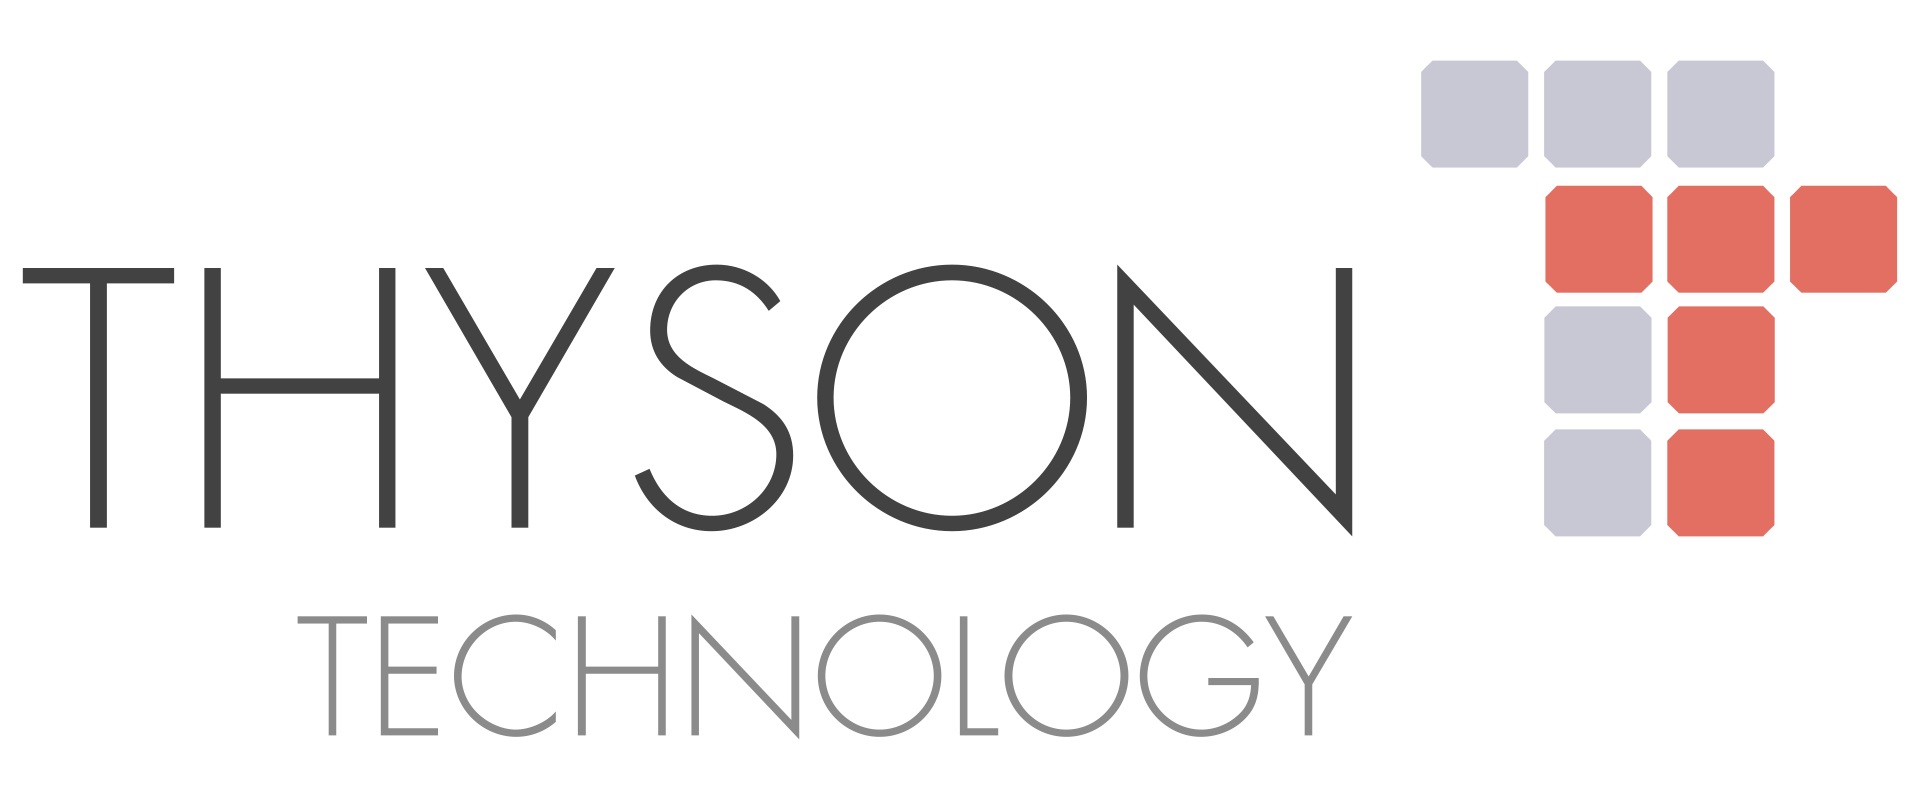 Organisation Logo - Thyson Technology Limited